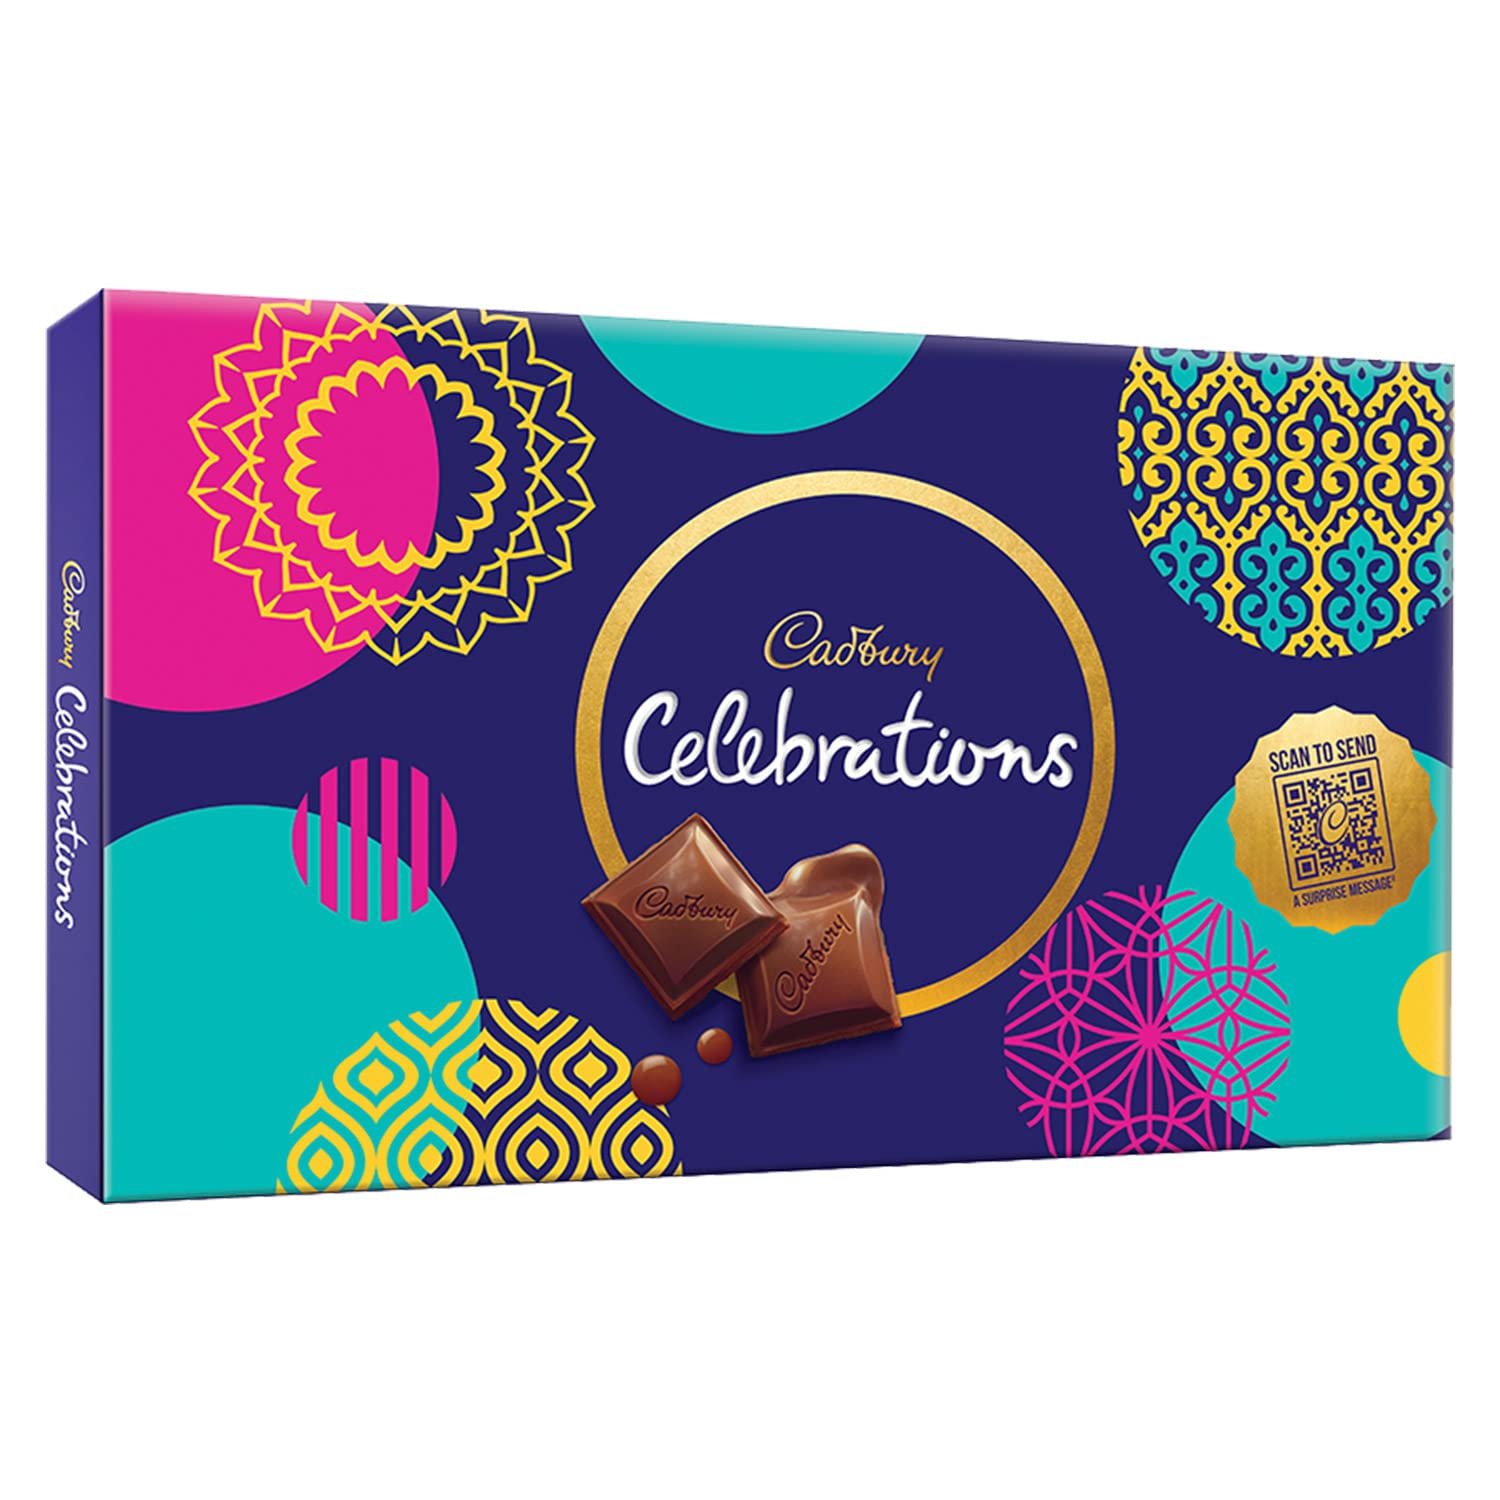 Cadbury Celebrations Assorted Chocolate Gift Pack Bars Price in India - Buy  Cadbury Celebrations Assorted Chocolate Gift Pack Bars online at  Flipkart.com